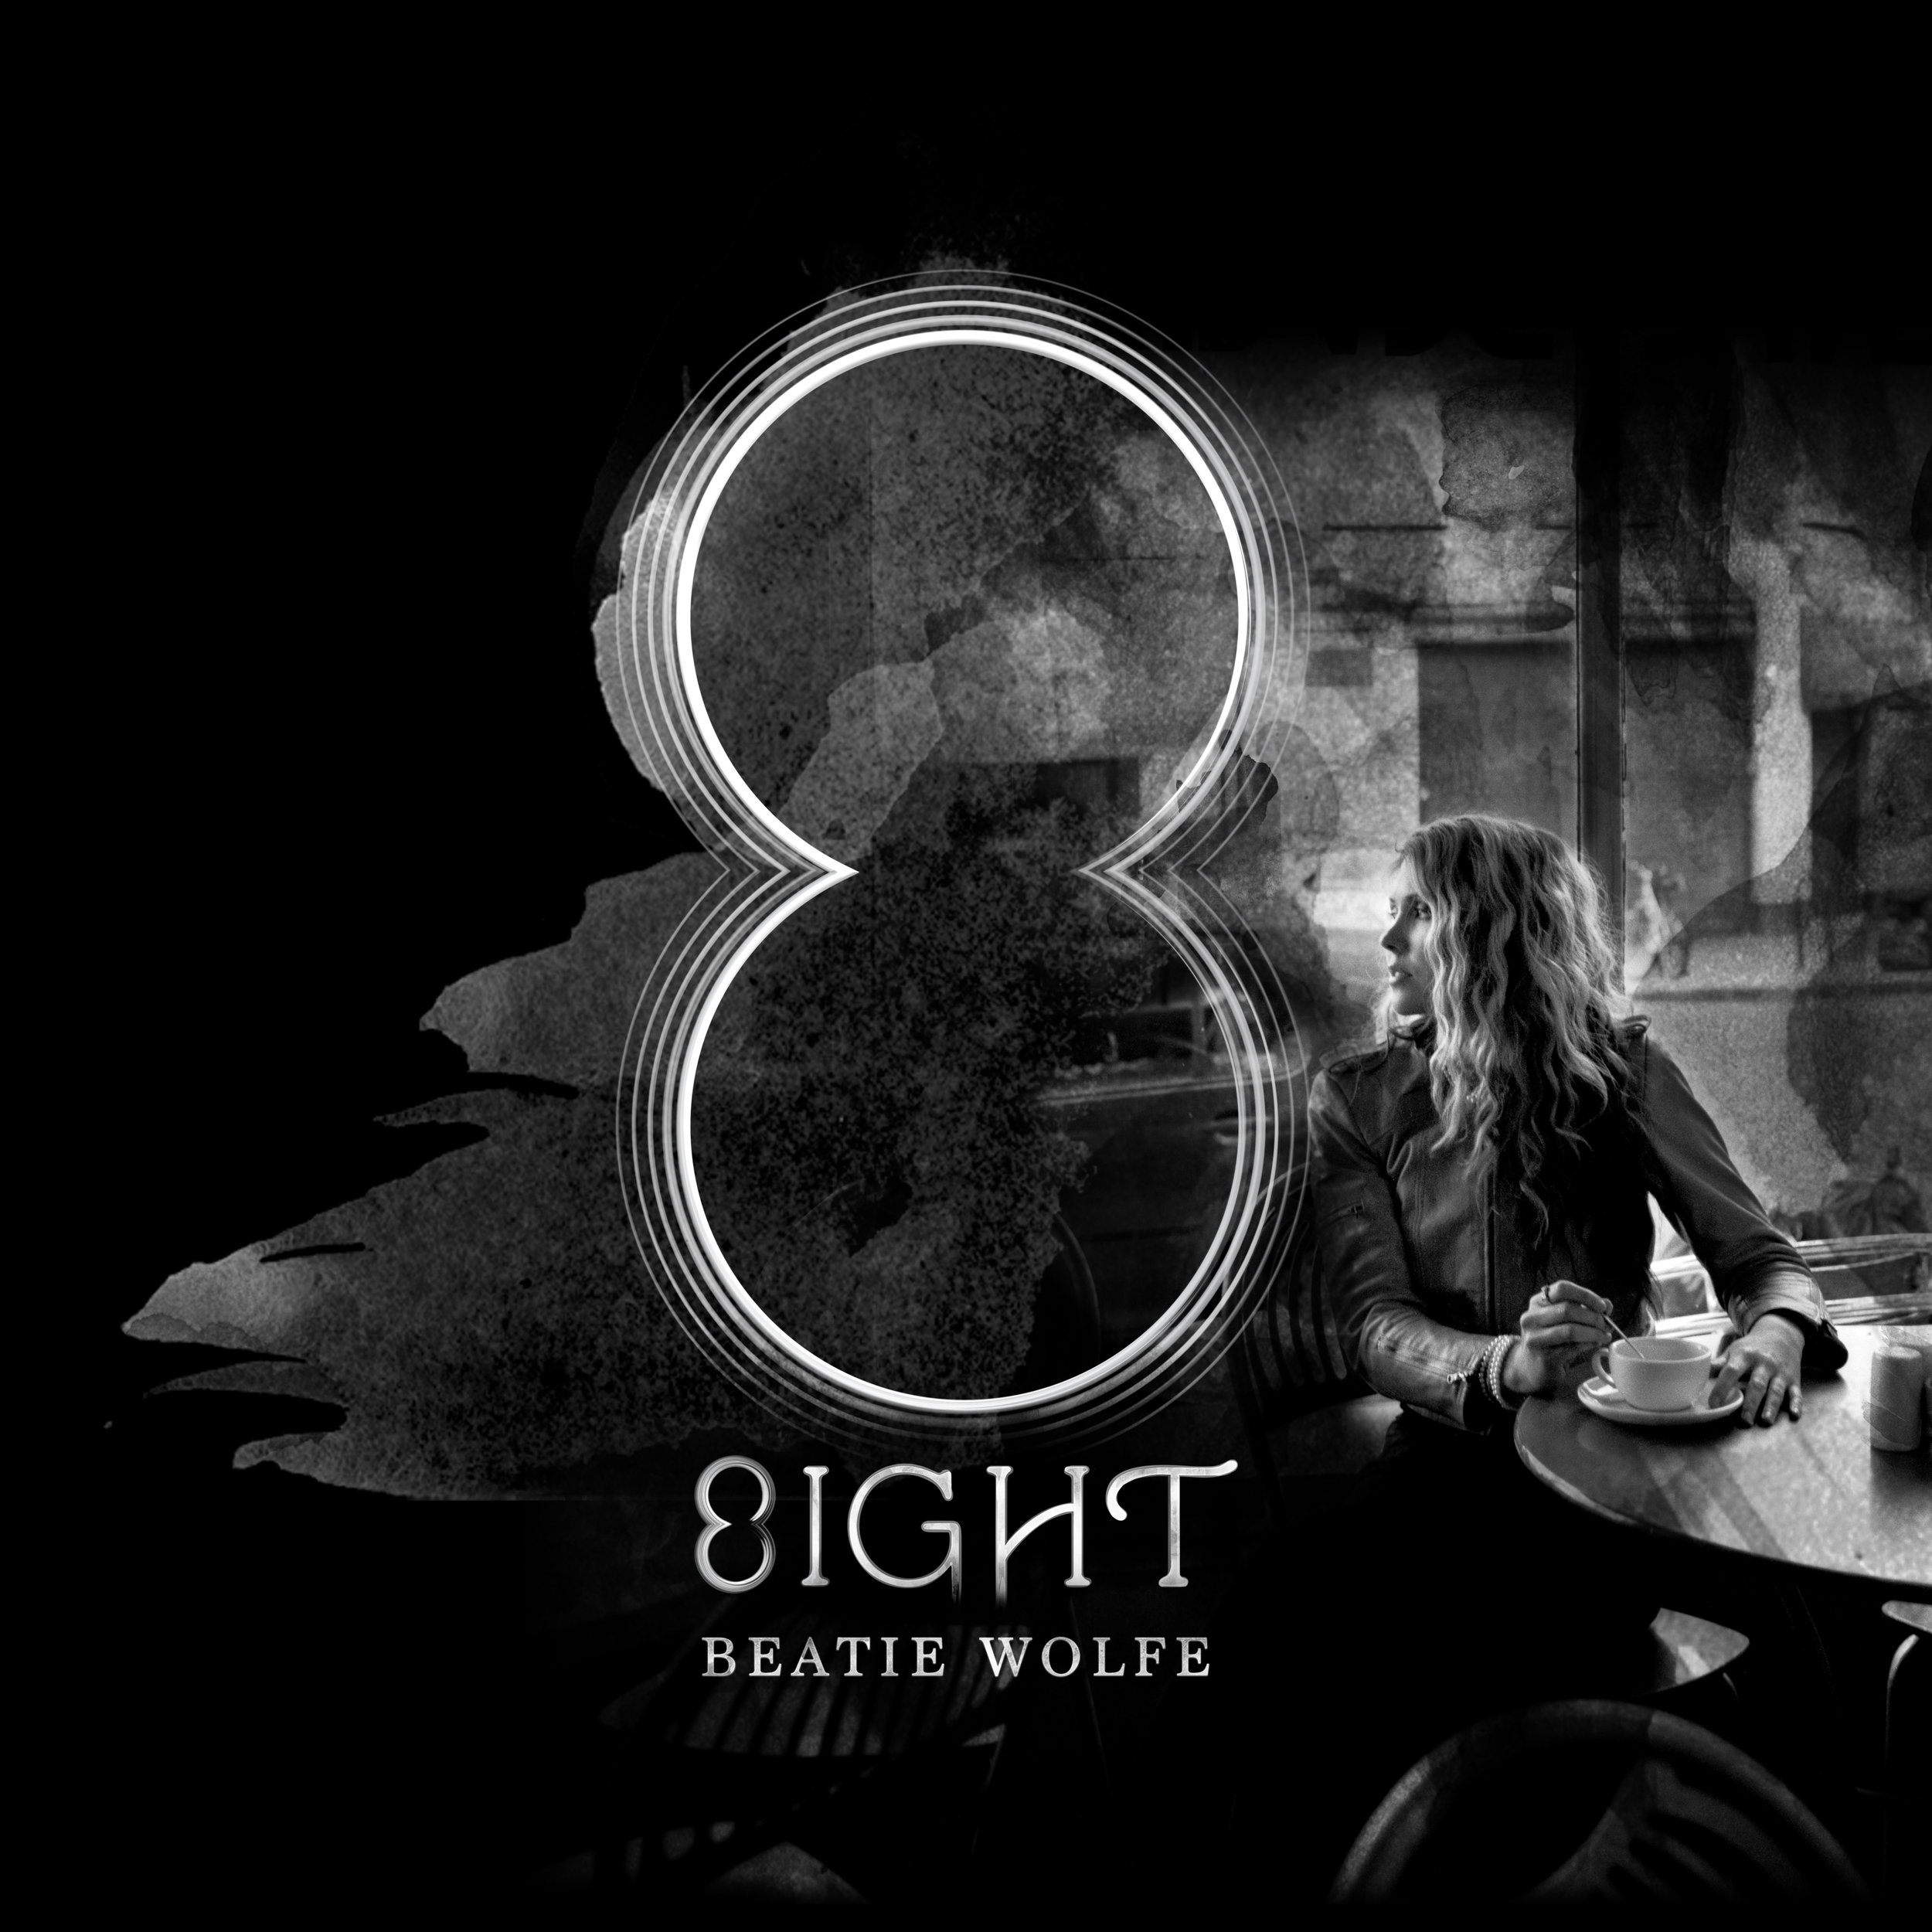 8ight - Official Album Artwork